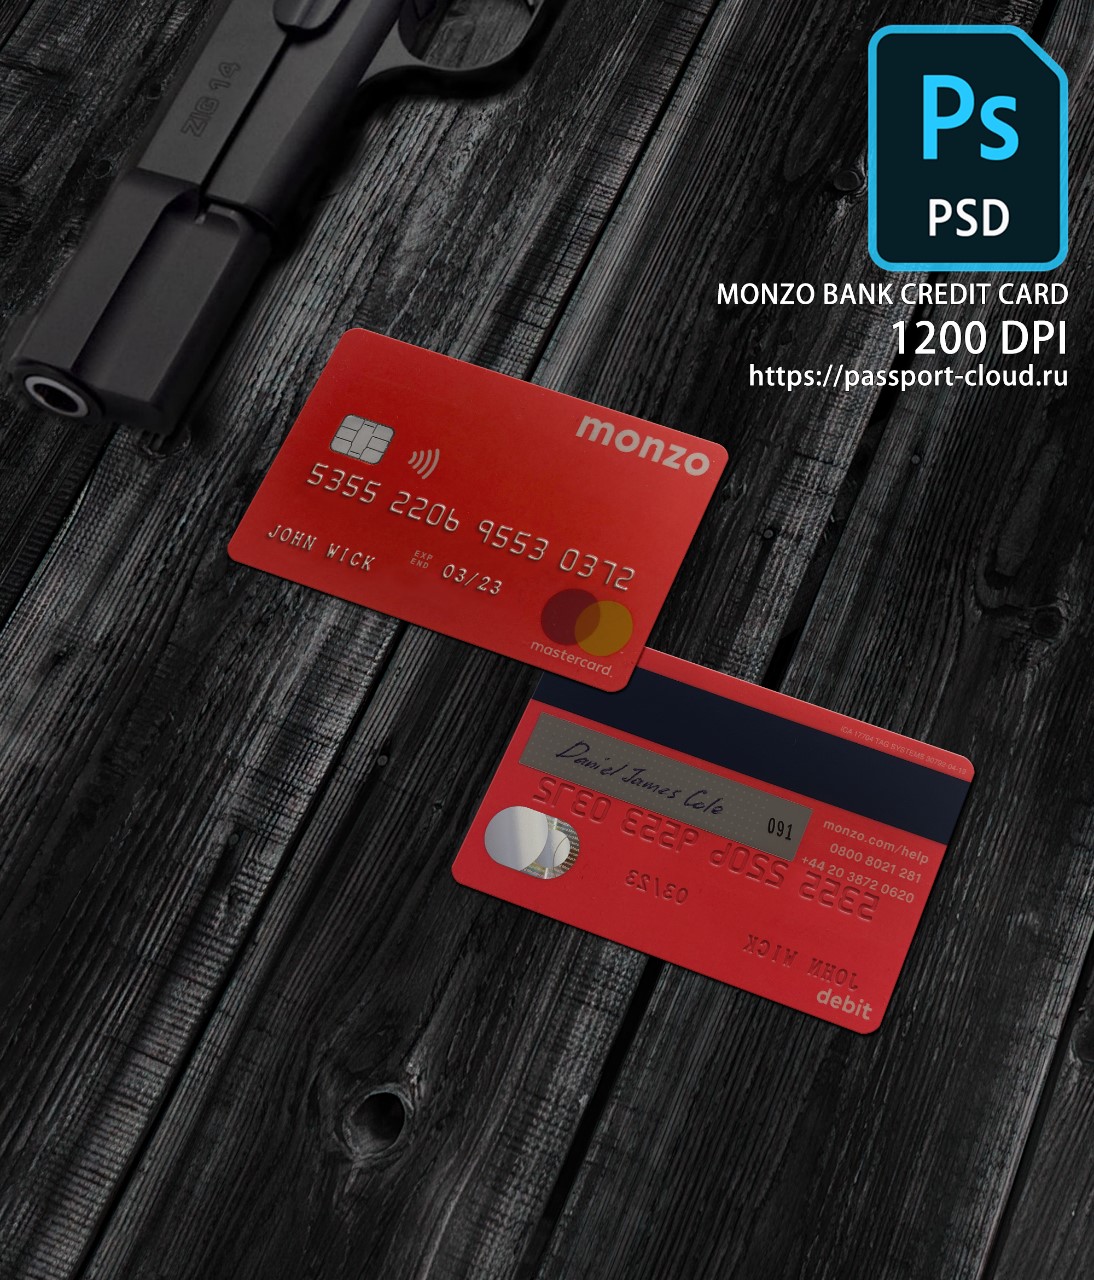 Monzo Bank Credit Card PSD1